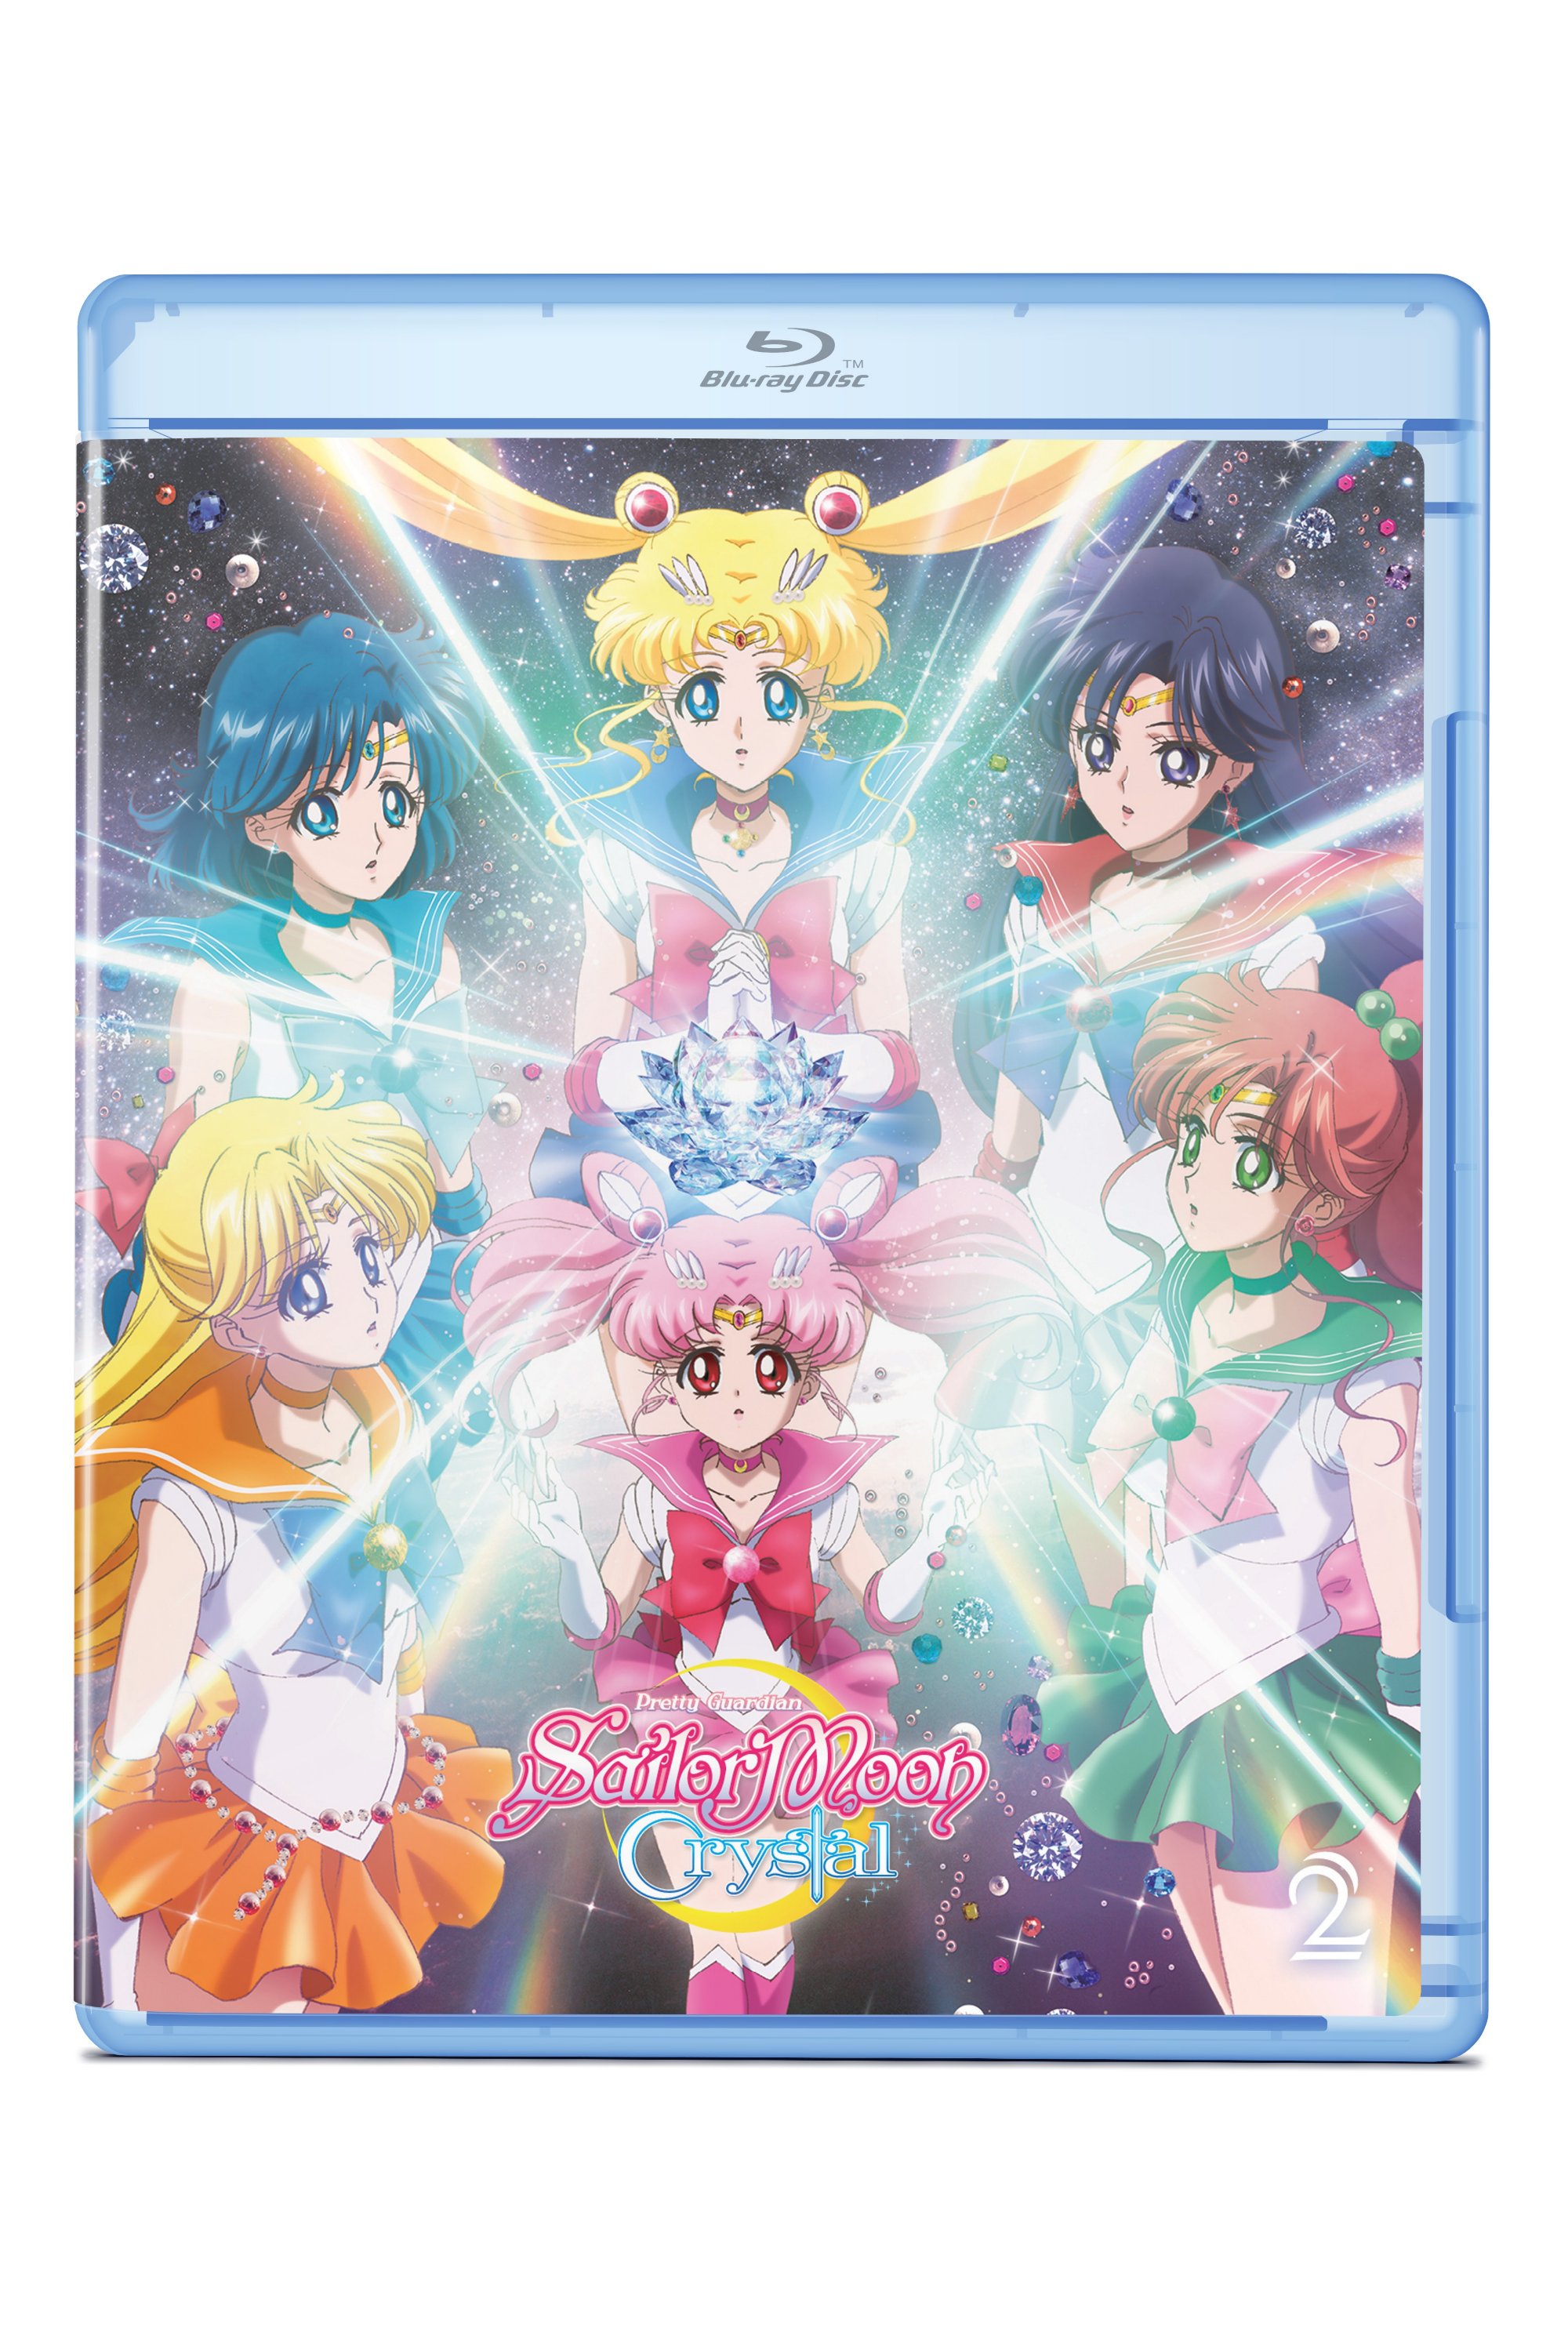 Sailor Moon Crystal Season 3 Blu-ray & DVD Anime